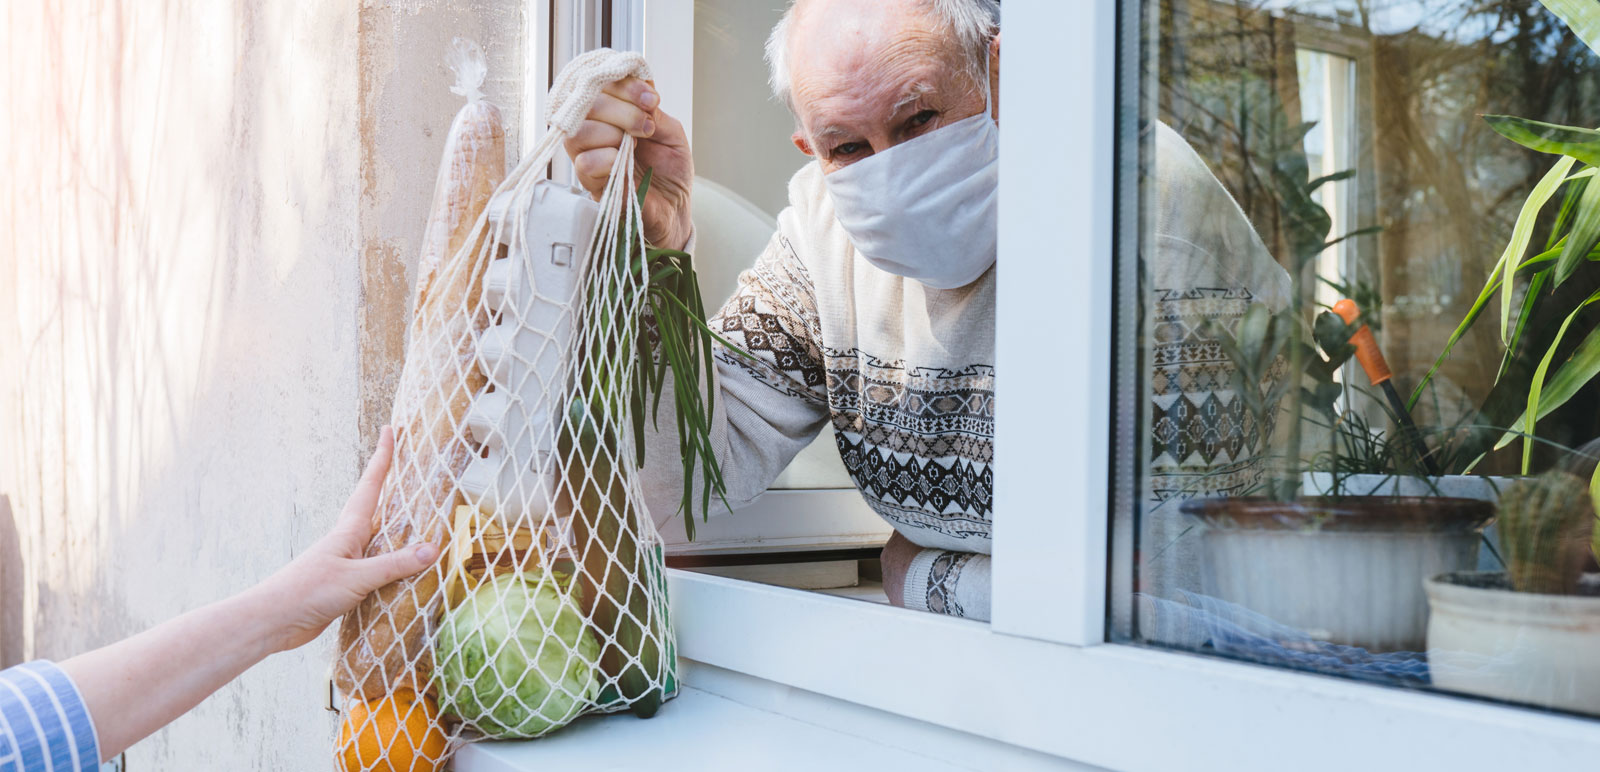 elderly man receiving groceries through window